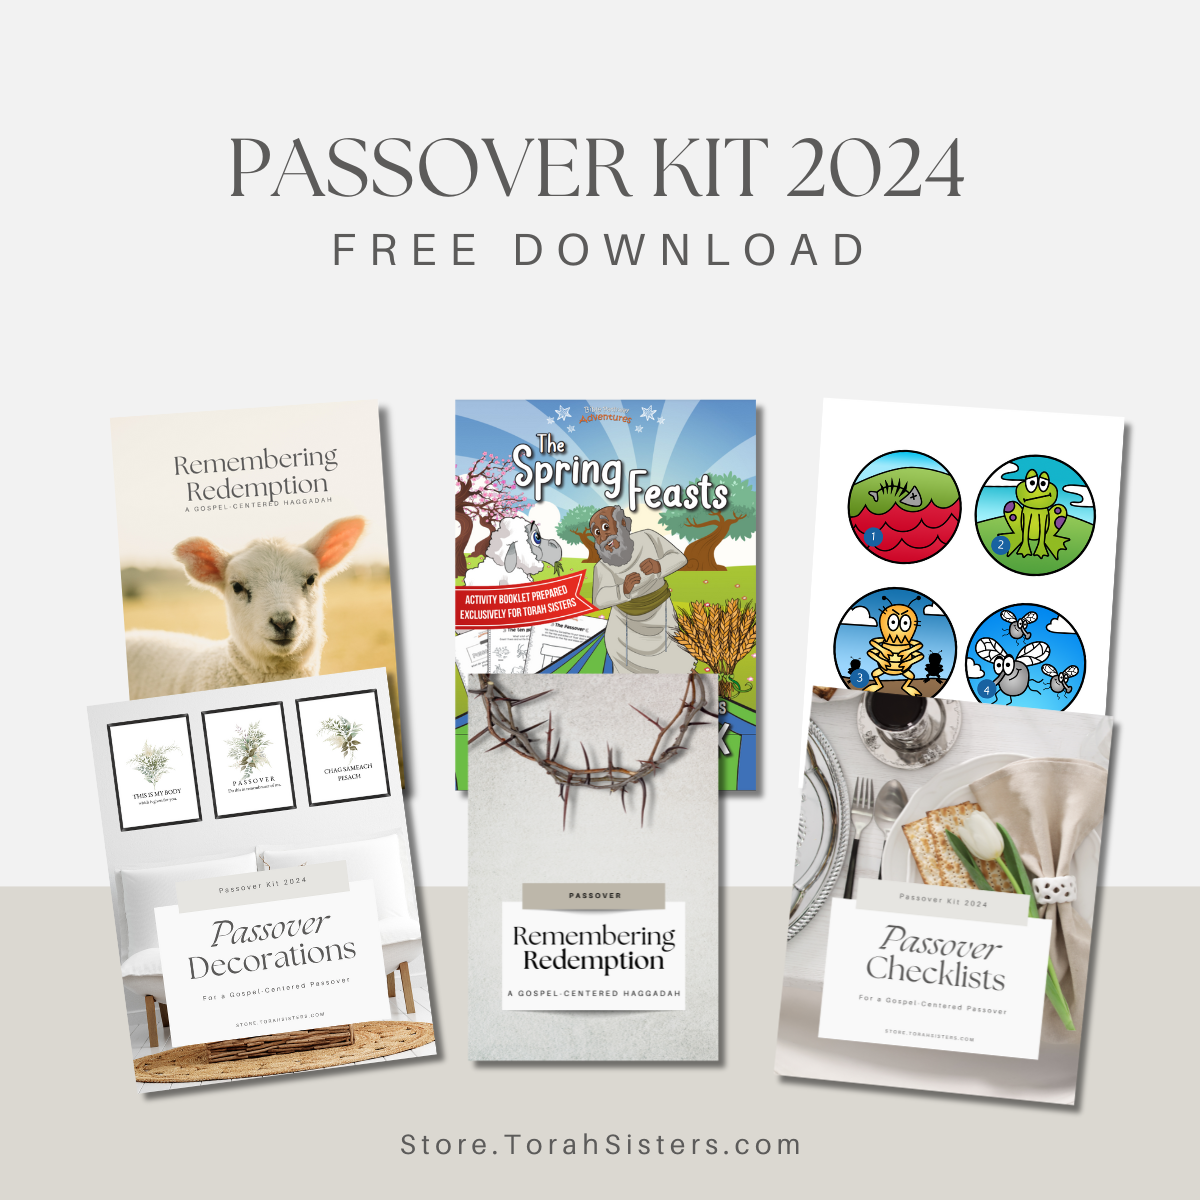 Passover Kit 2024